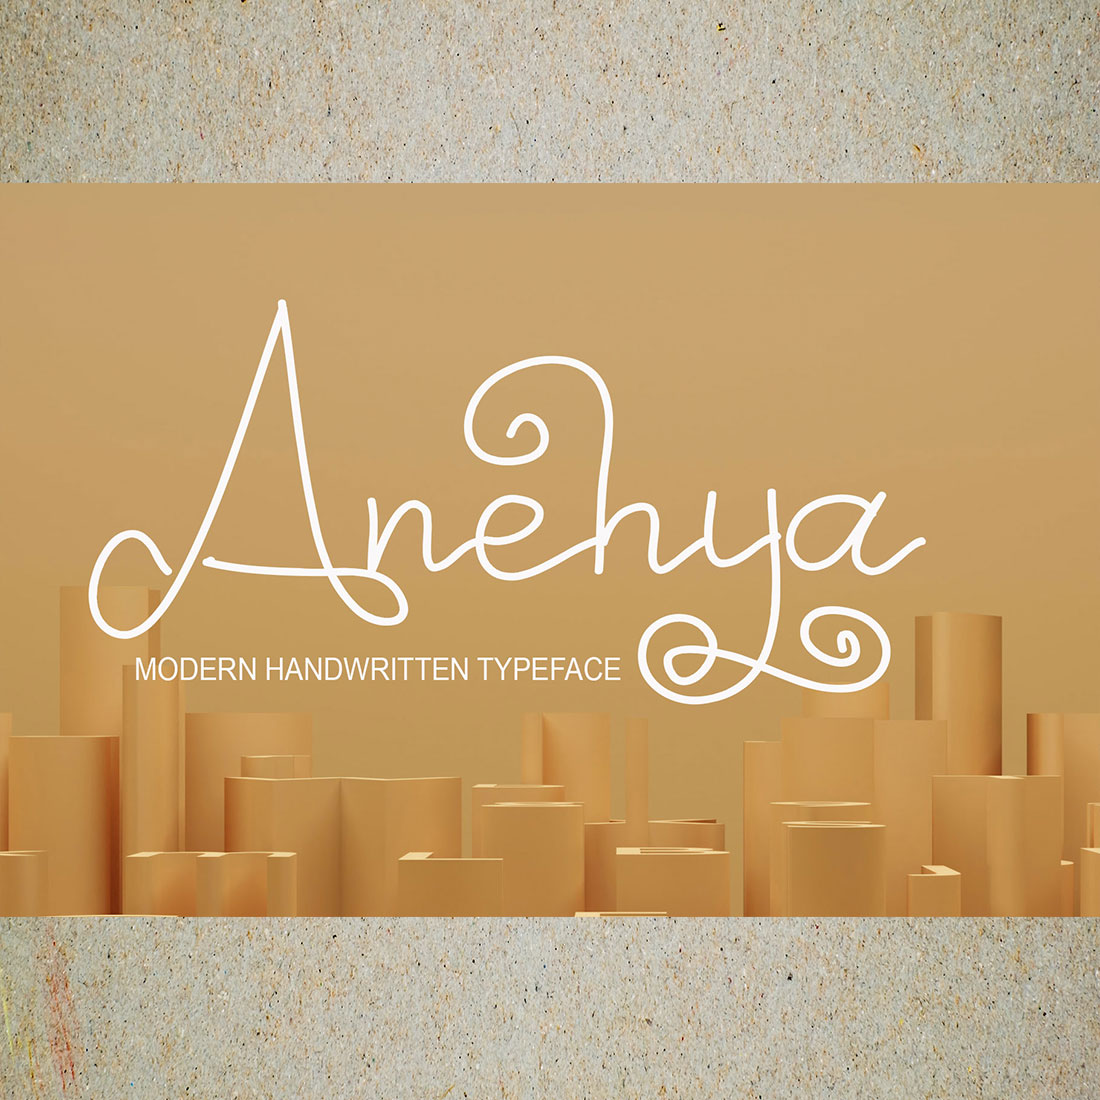 Anehya Script Signature Font image cover.